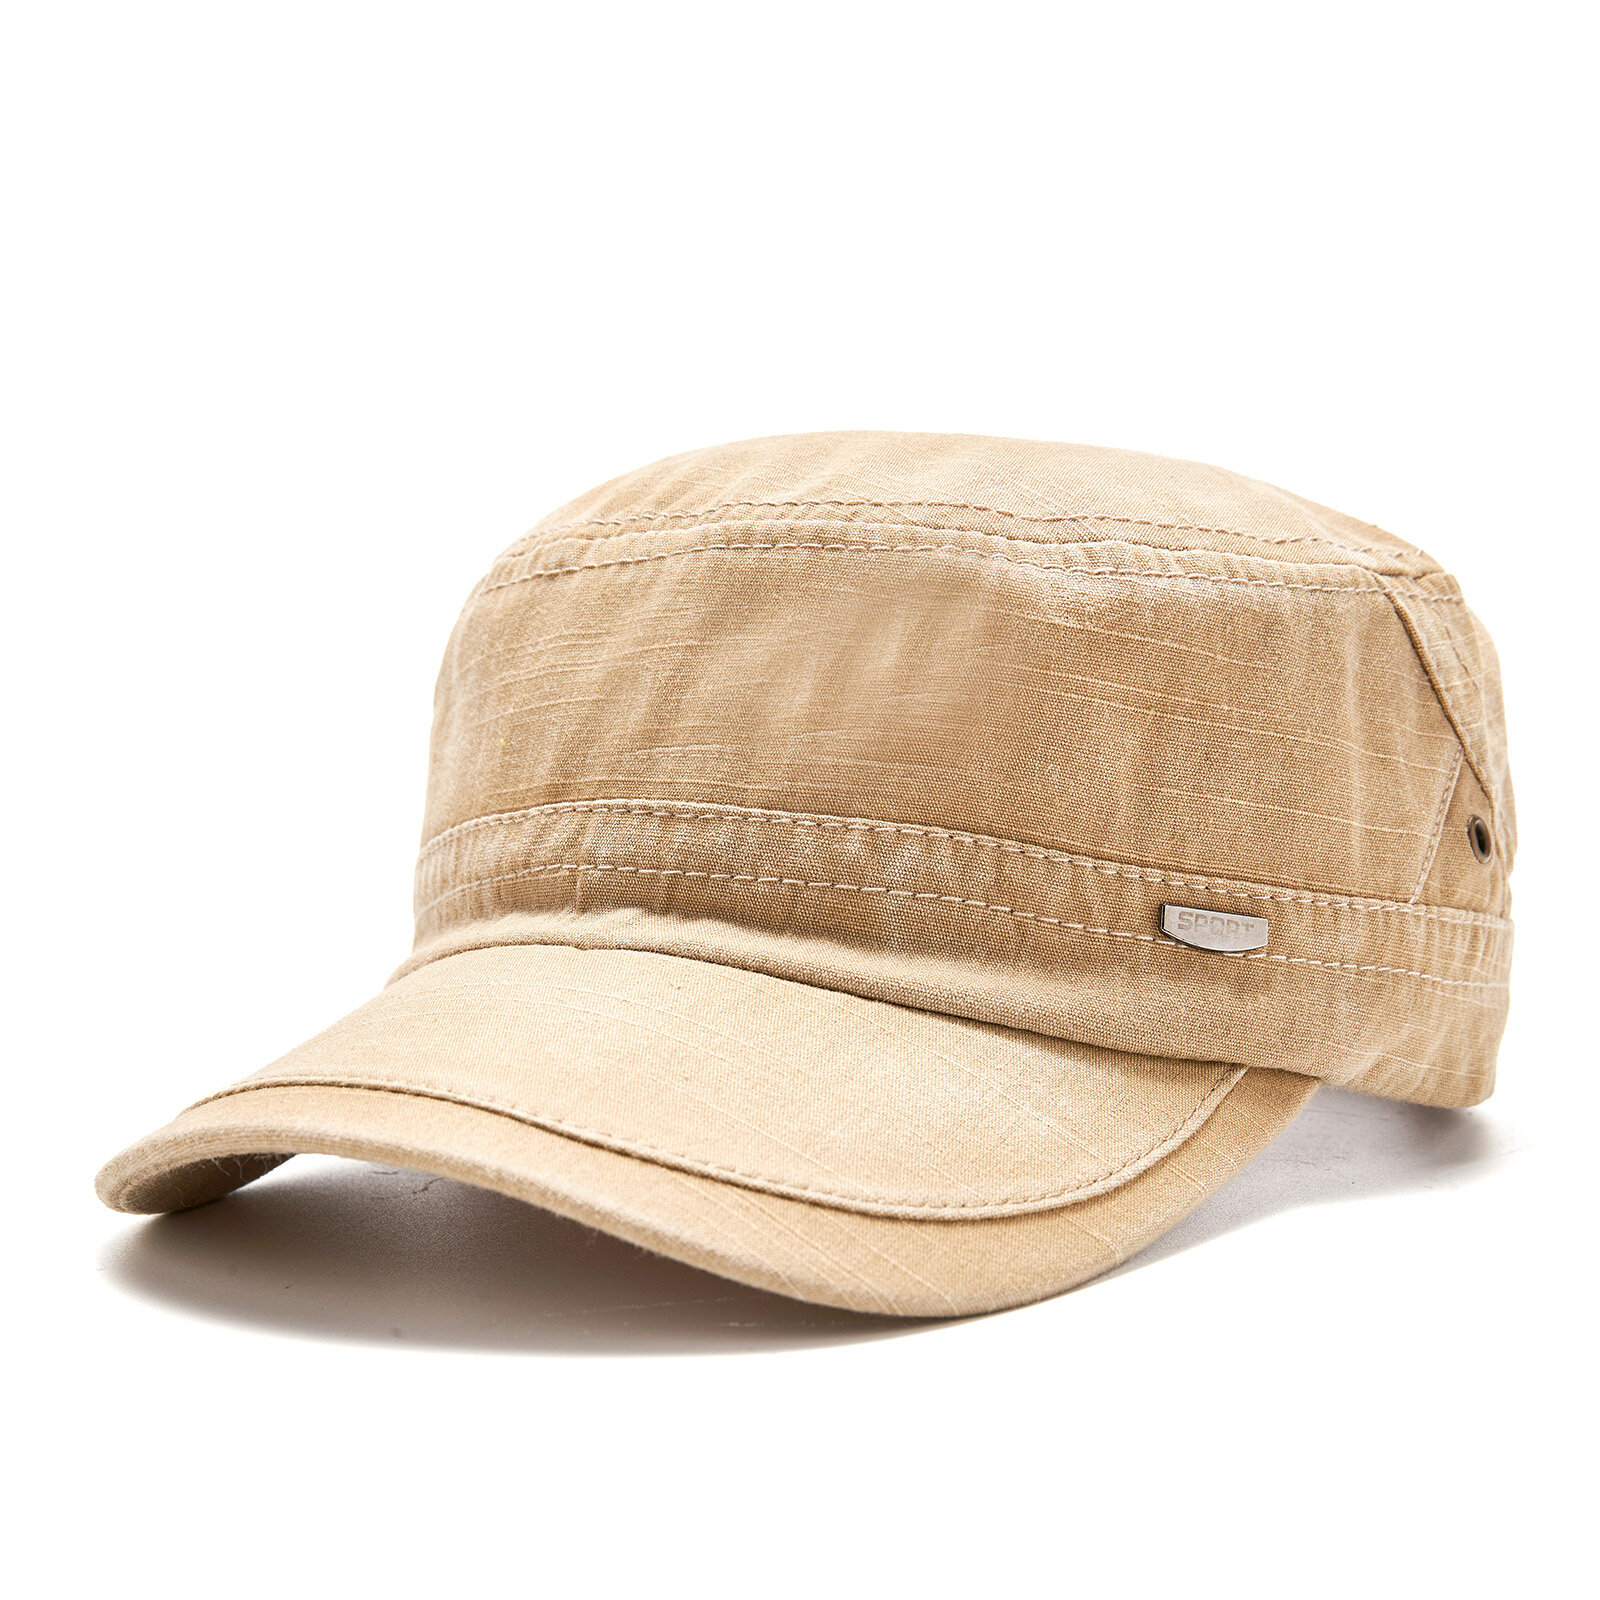 Menico Men's Cotton Sweat Absorbent Breathable Outdoor Casual Sunshade Sunscreen Flat Top Versatile Hat